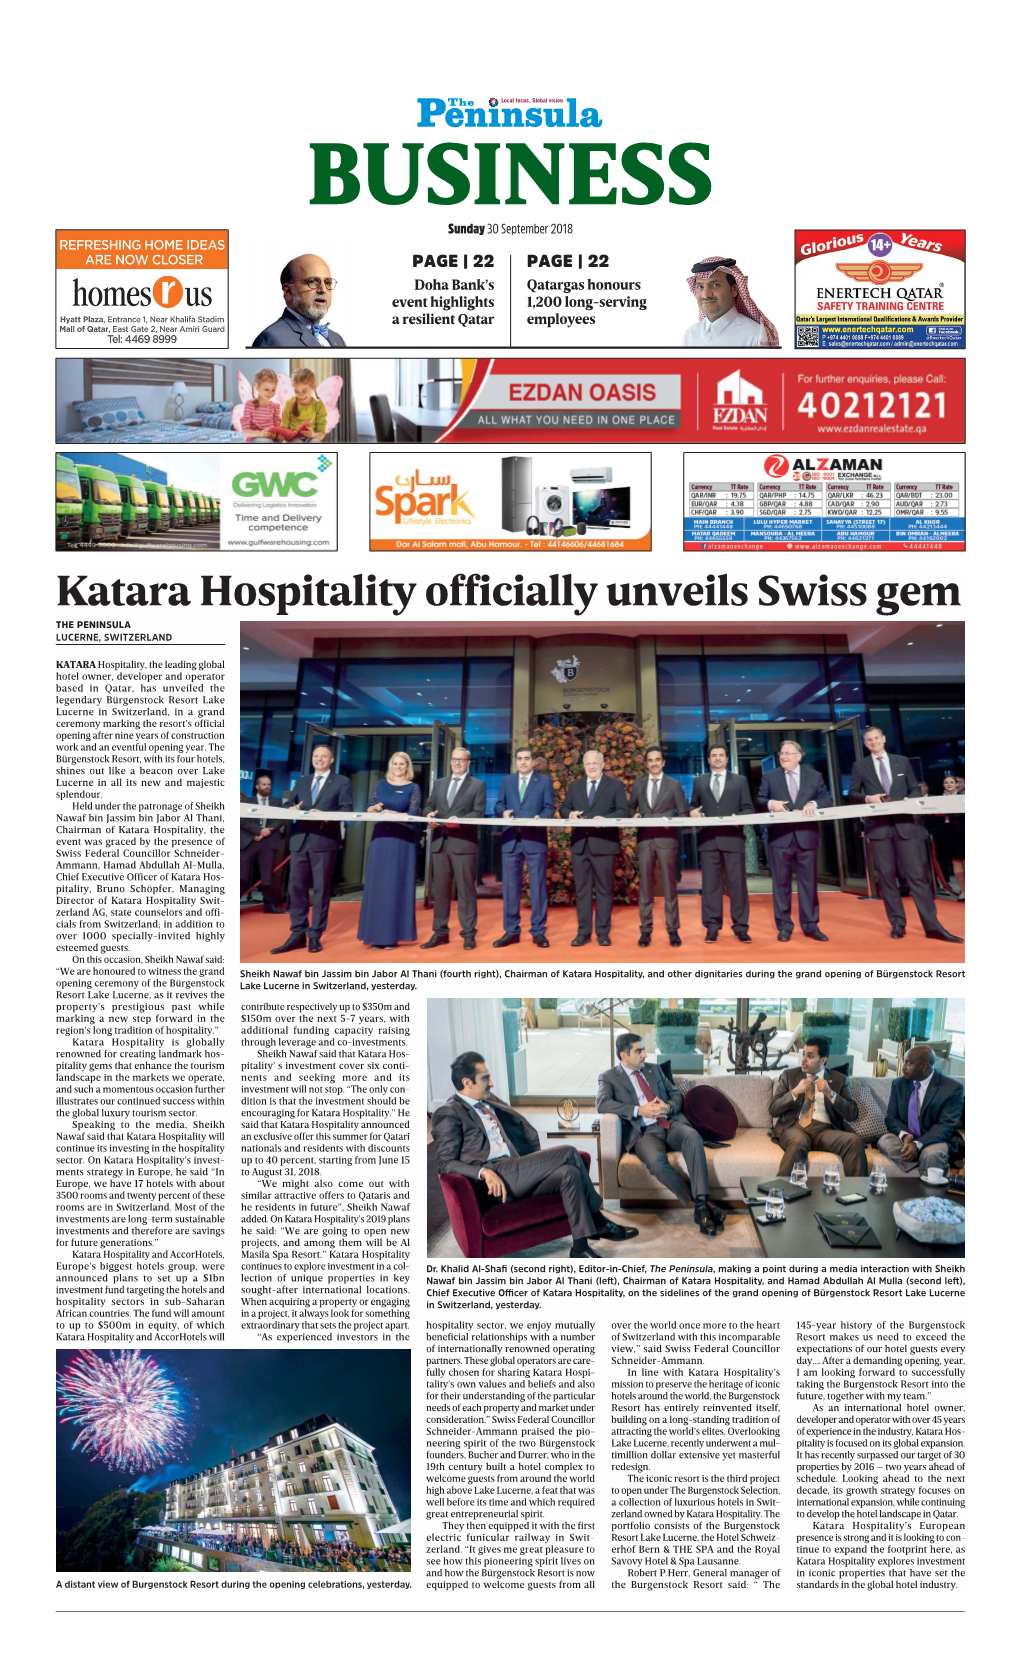 Katara Hospitality Officially Unveils Swiss Gem the PENINSULA LUCERNE, SWITZERLAND